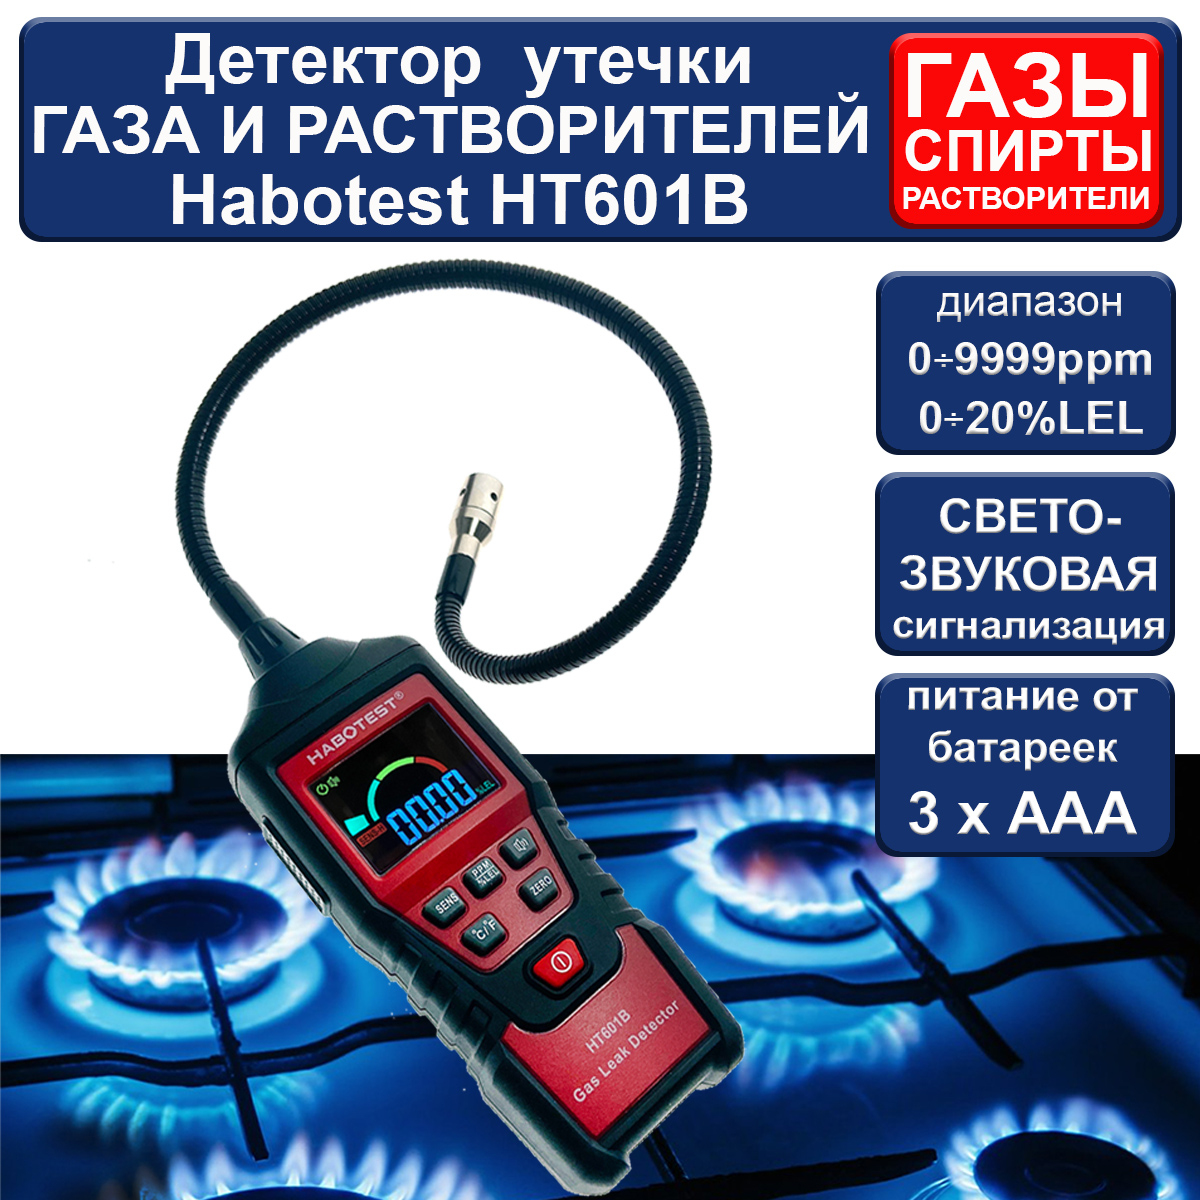 Детектор утечки газа Habotest HT601B